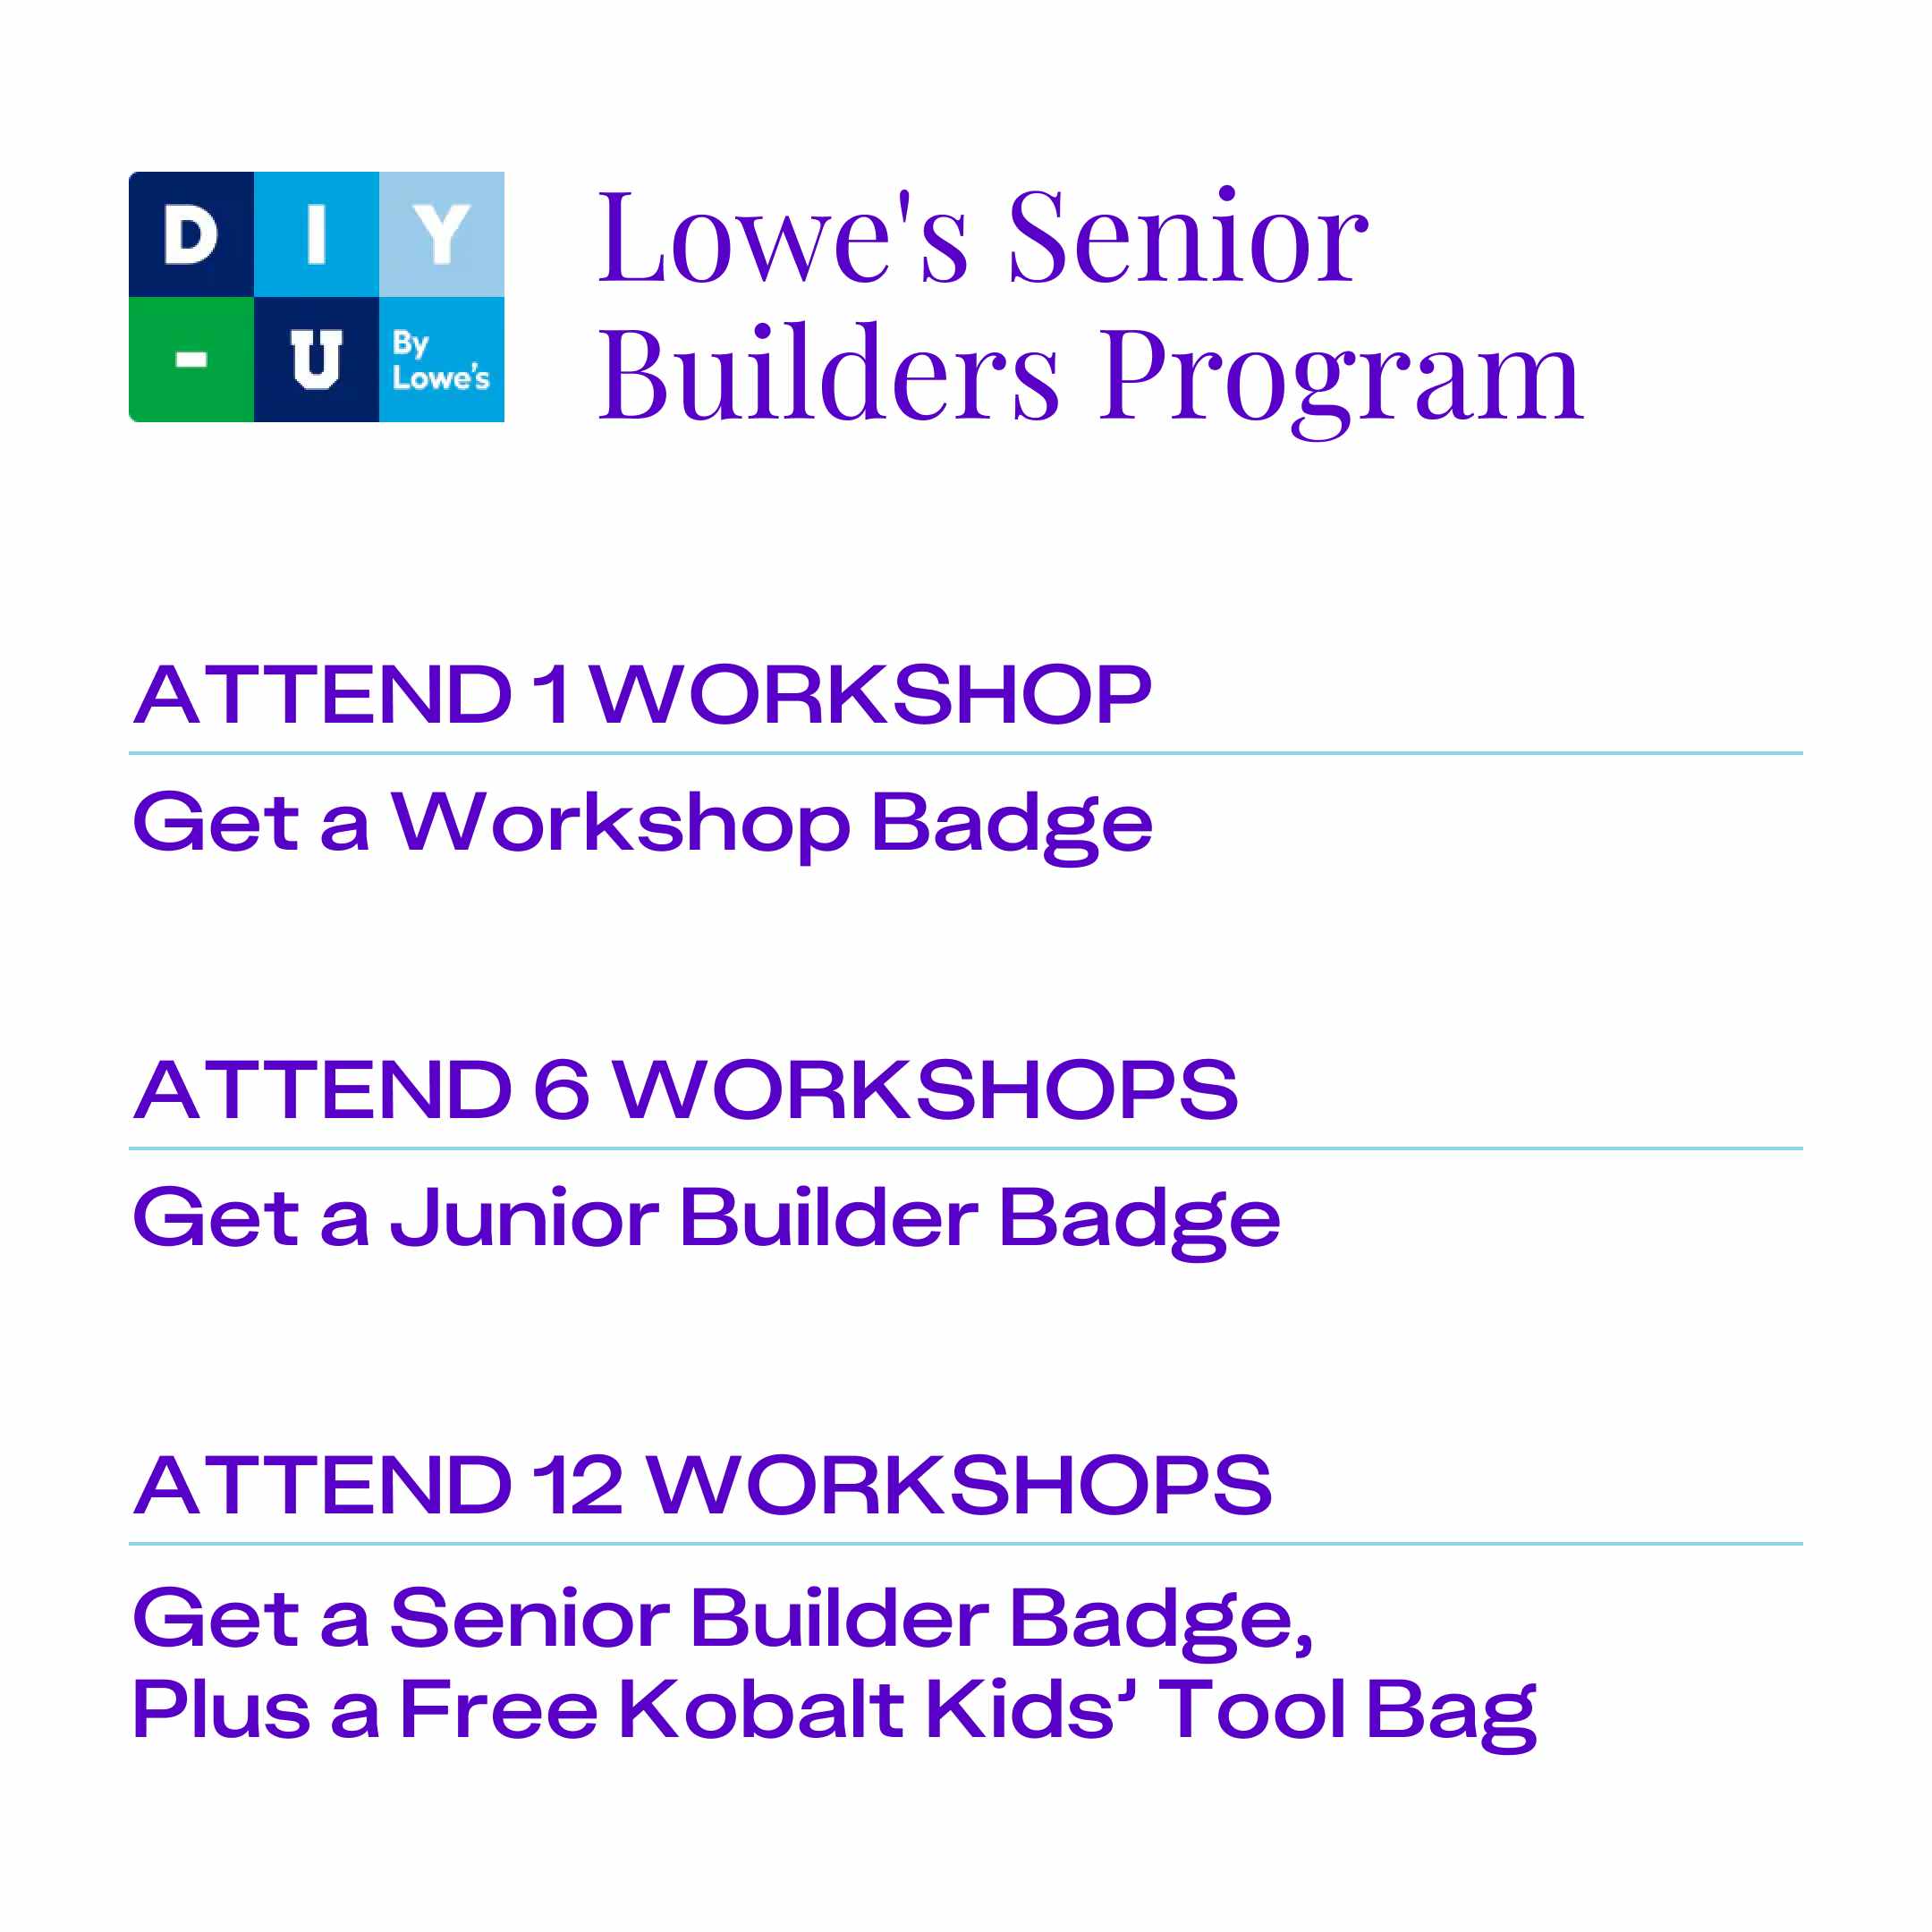 lowes-senior-builders-program